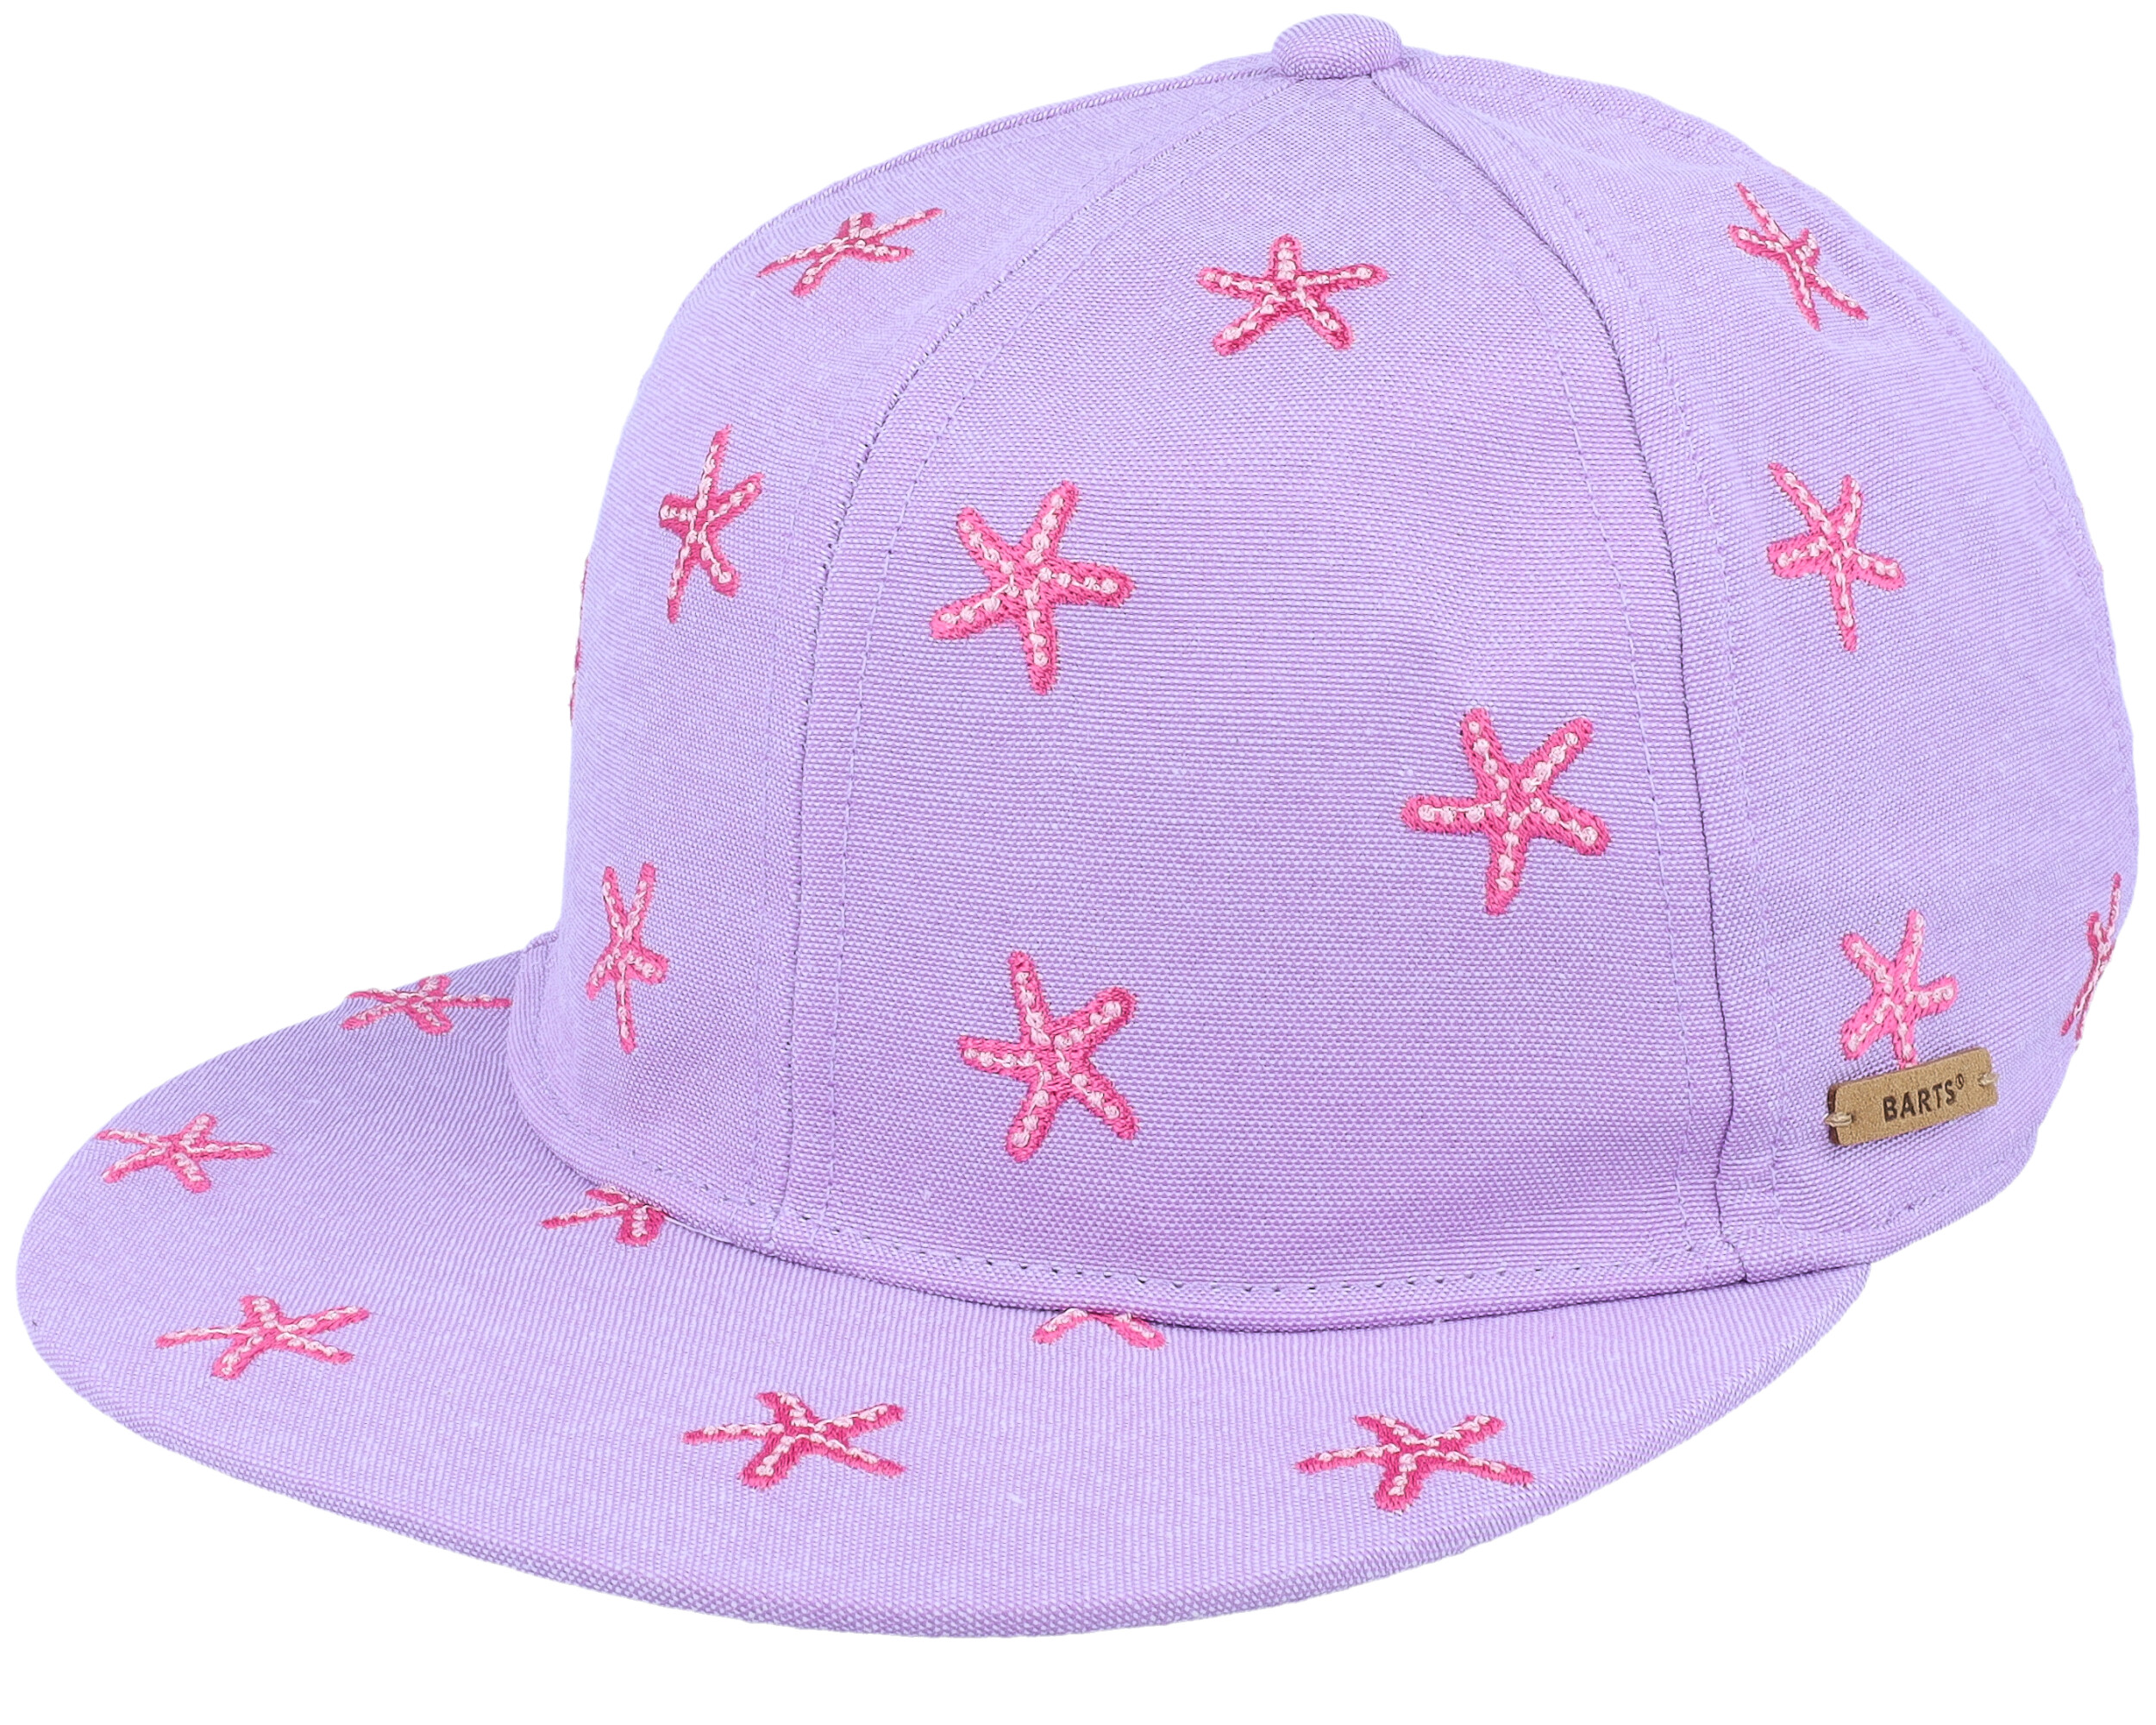 Kids Pauk cap Cap Strapback - Barts Purple